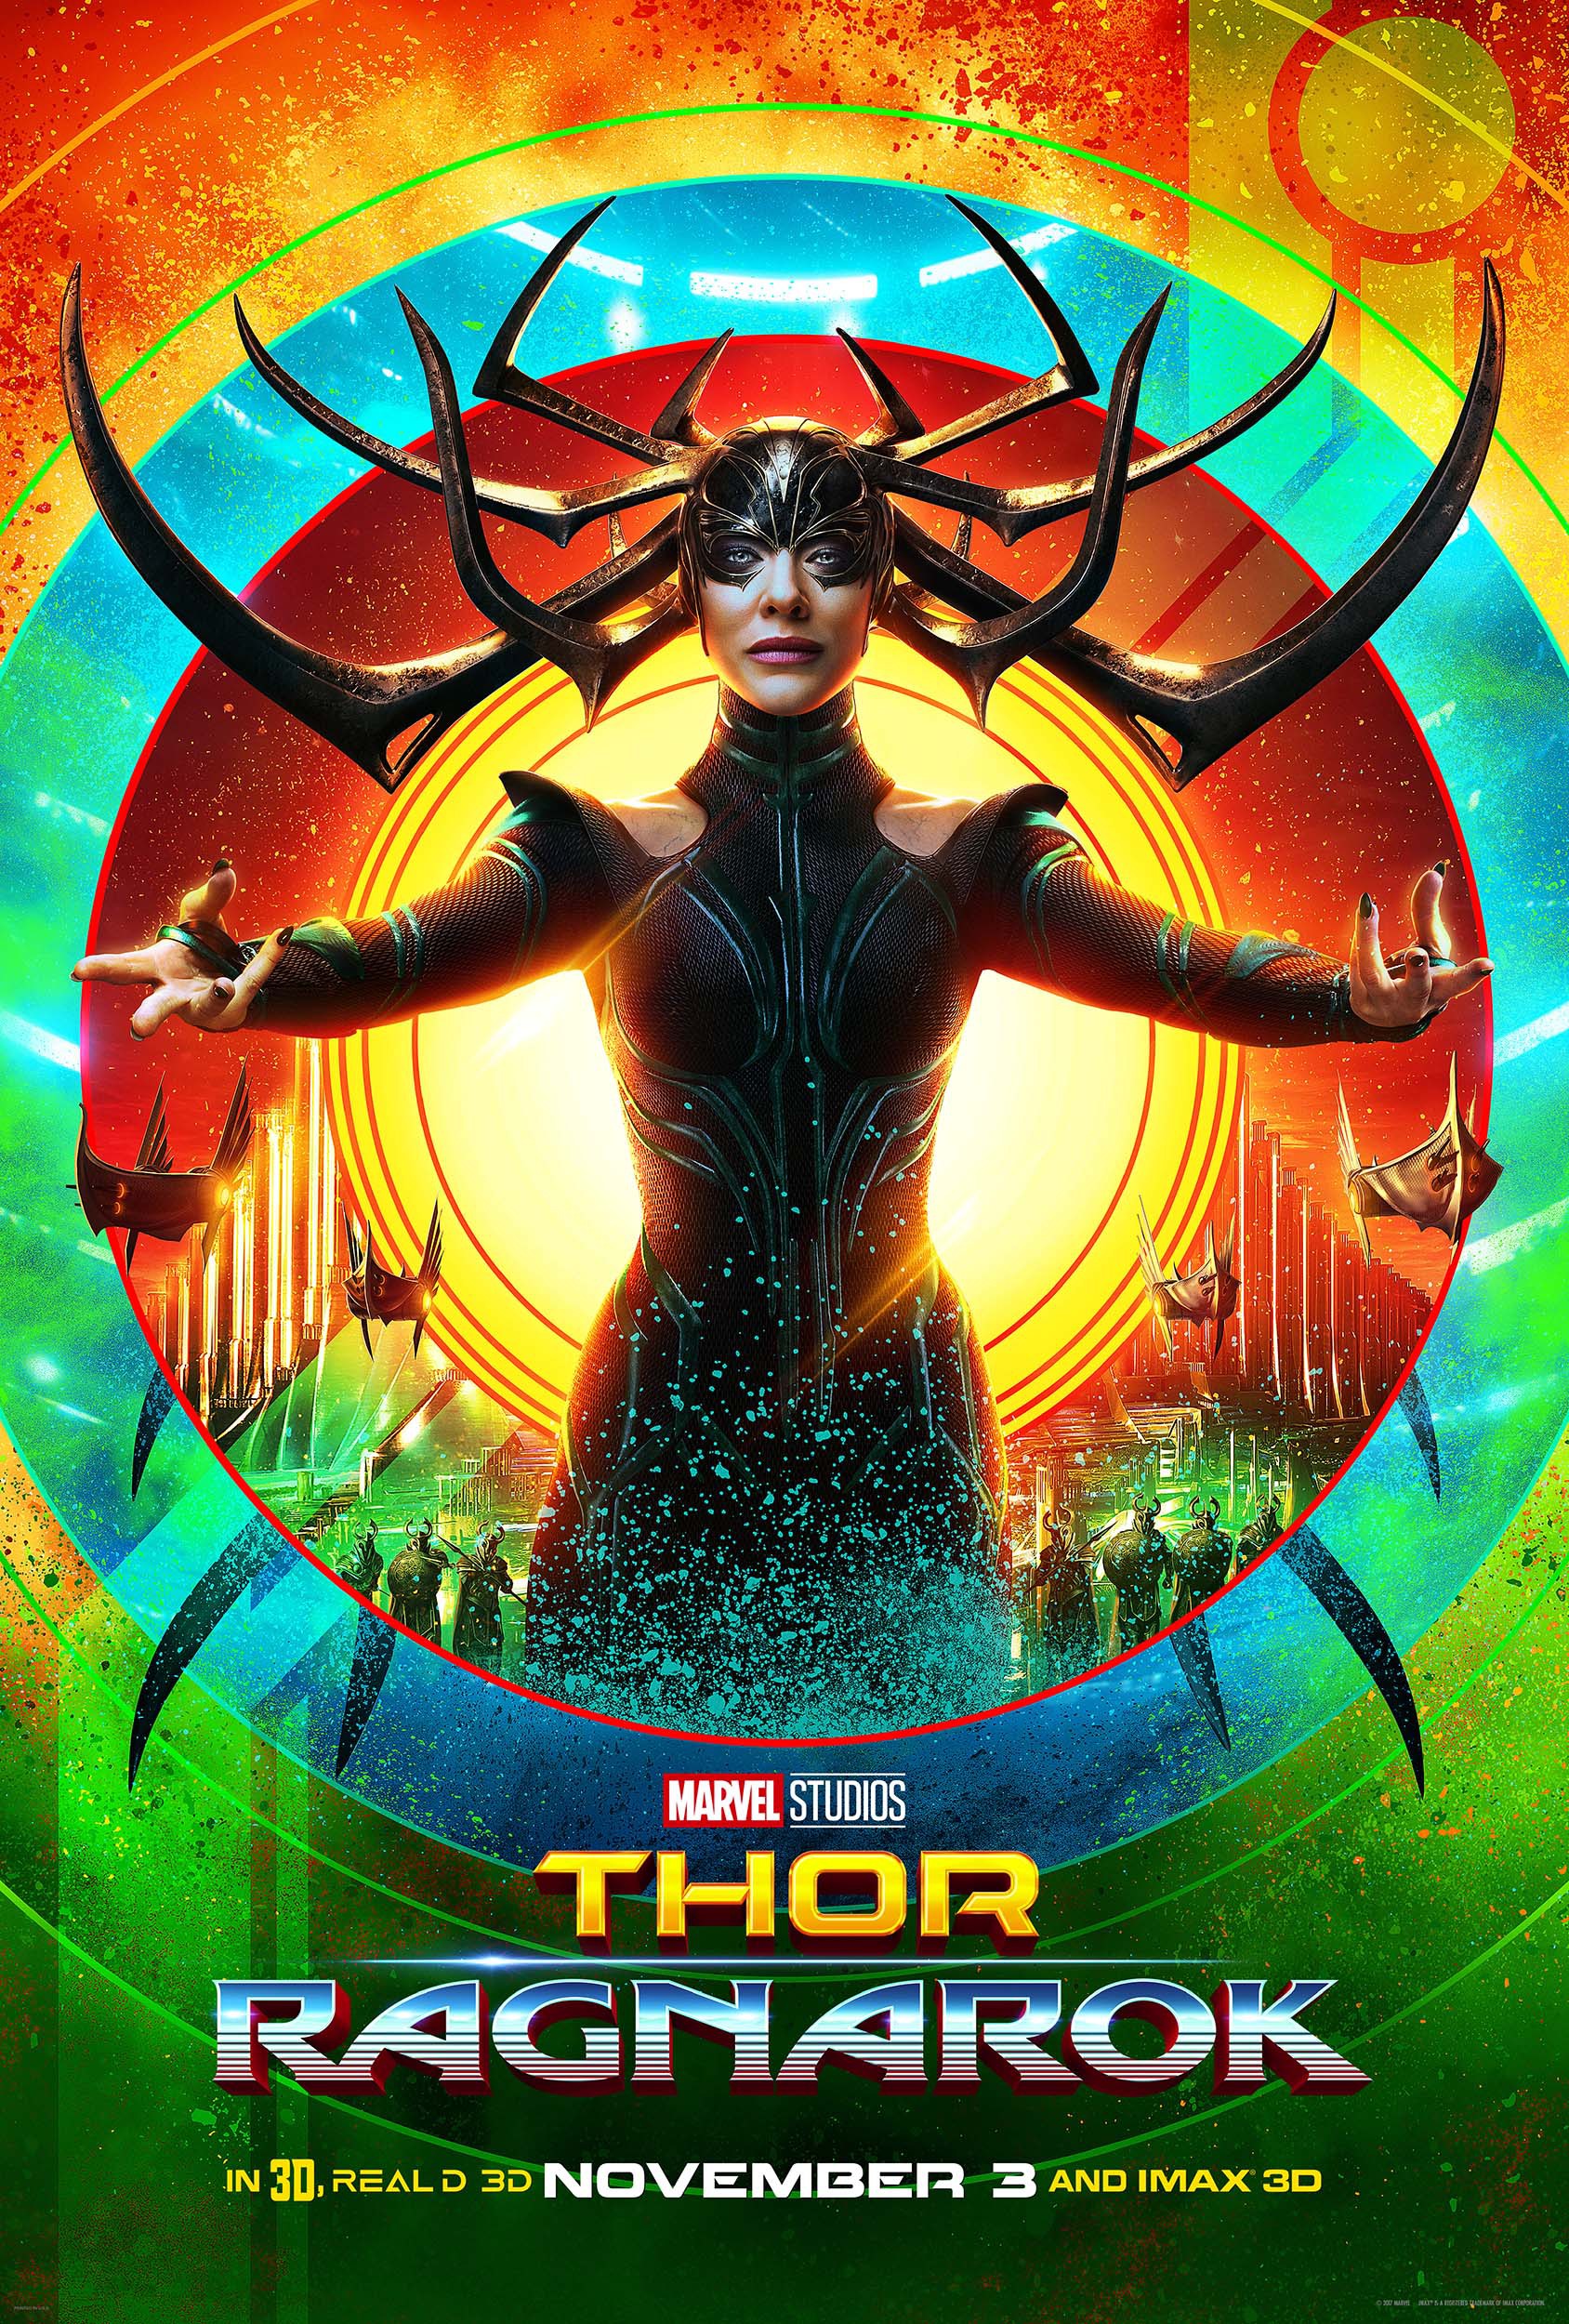 Image Thor Ragnarok Hela Poster Marvel Cinematic Universe Wiki Fandom Powered By Wikia